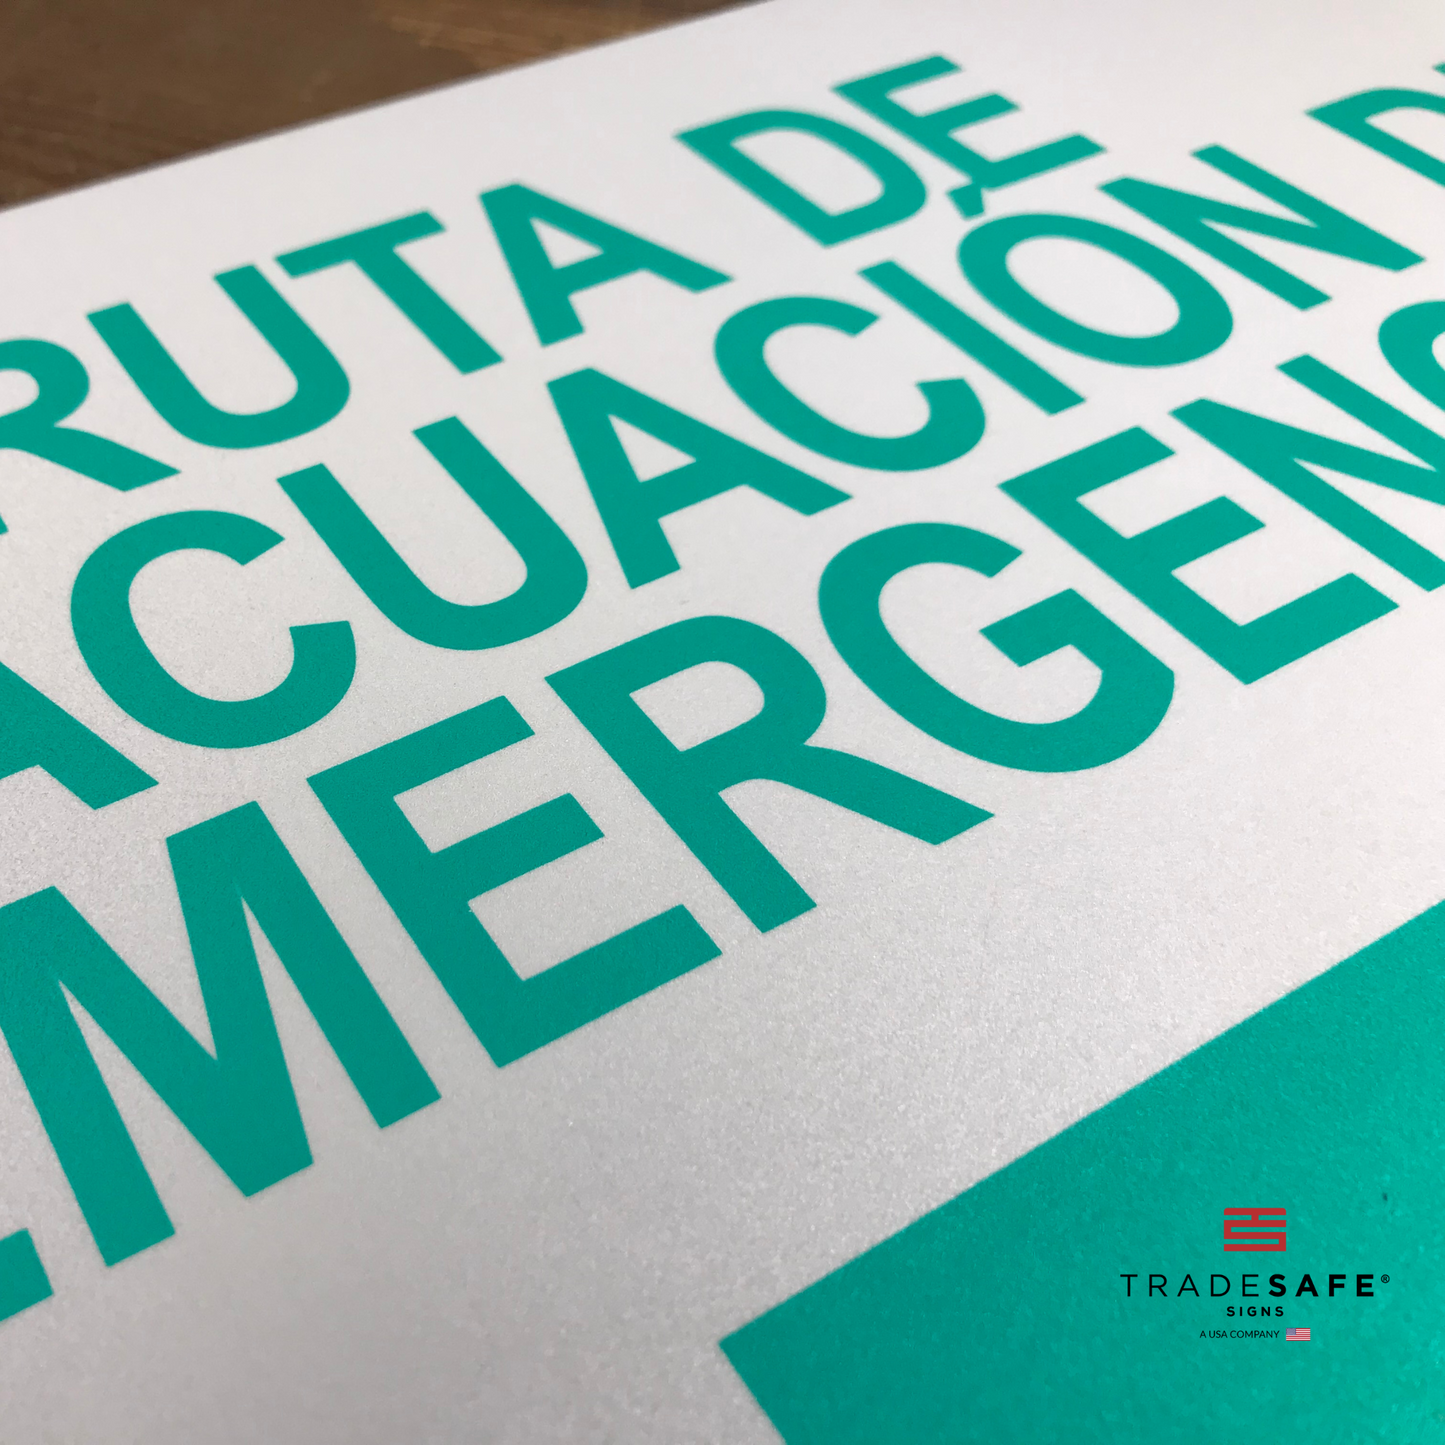 vibrant and highly visible "ruta de evacuación de emergencia" sign with right arrow